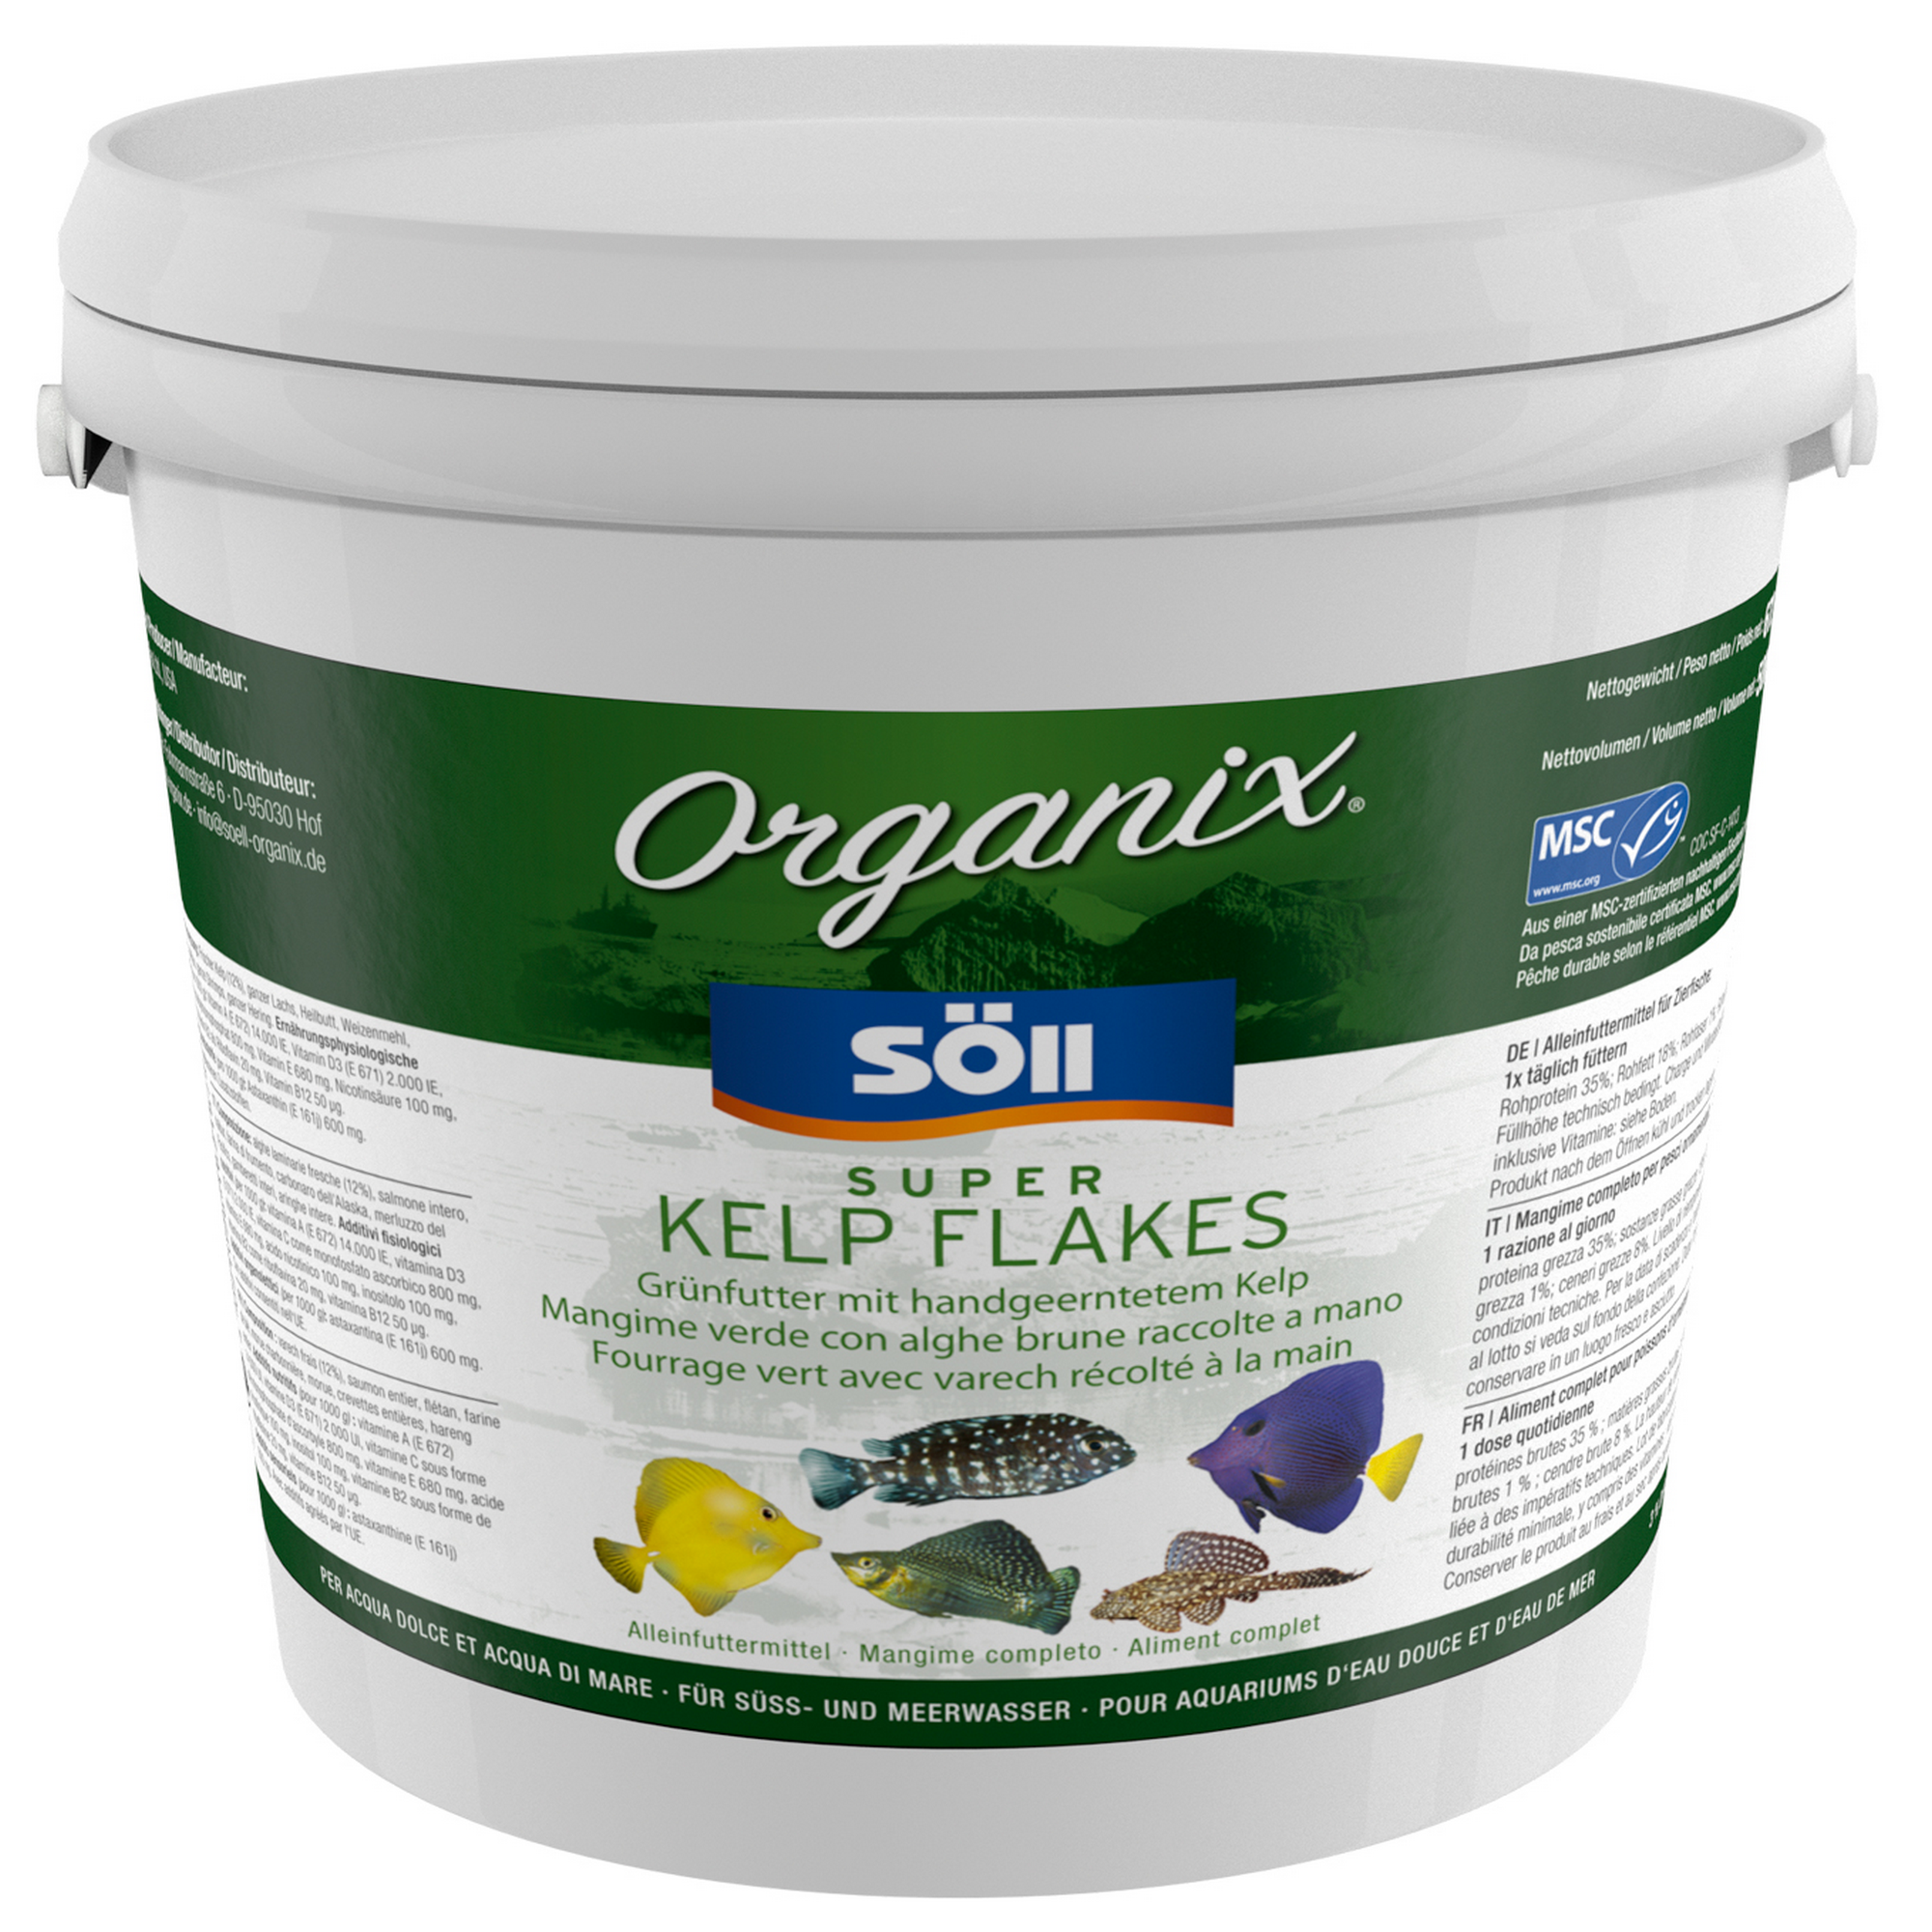 Organix Super Kelp Flakes 5 l + product picture